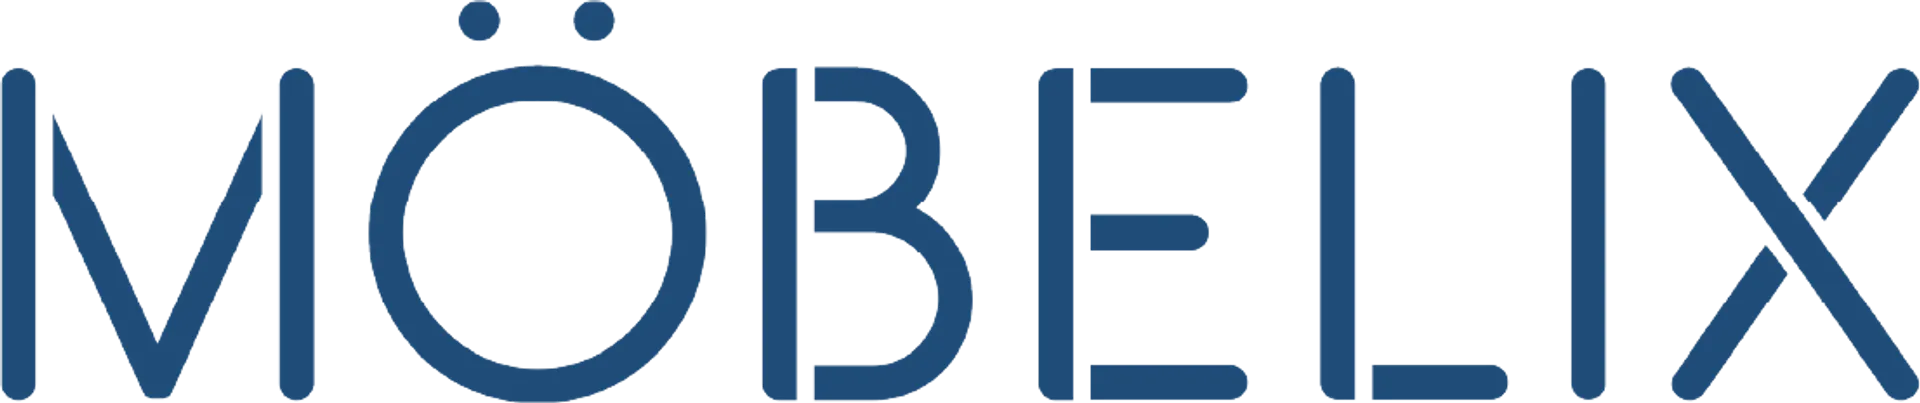 MÖBELIX logo of current catalogue